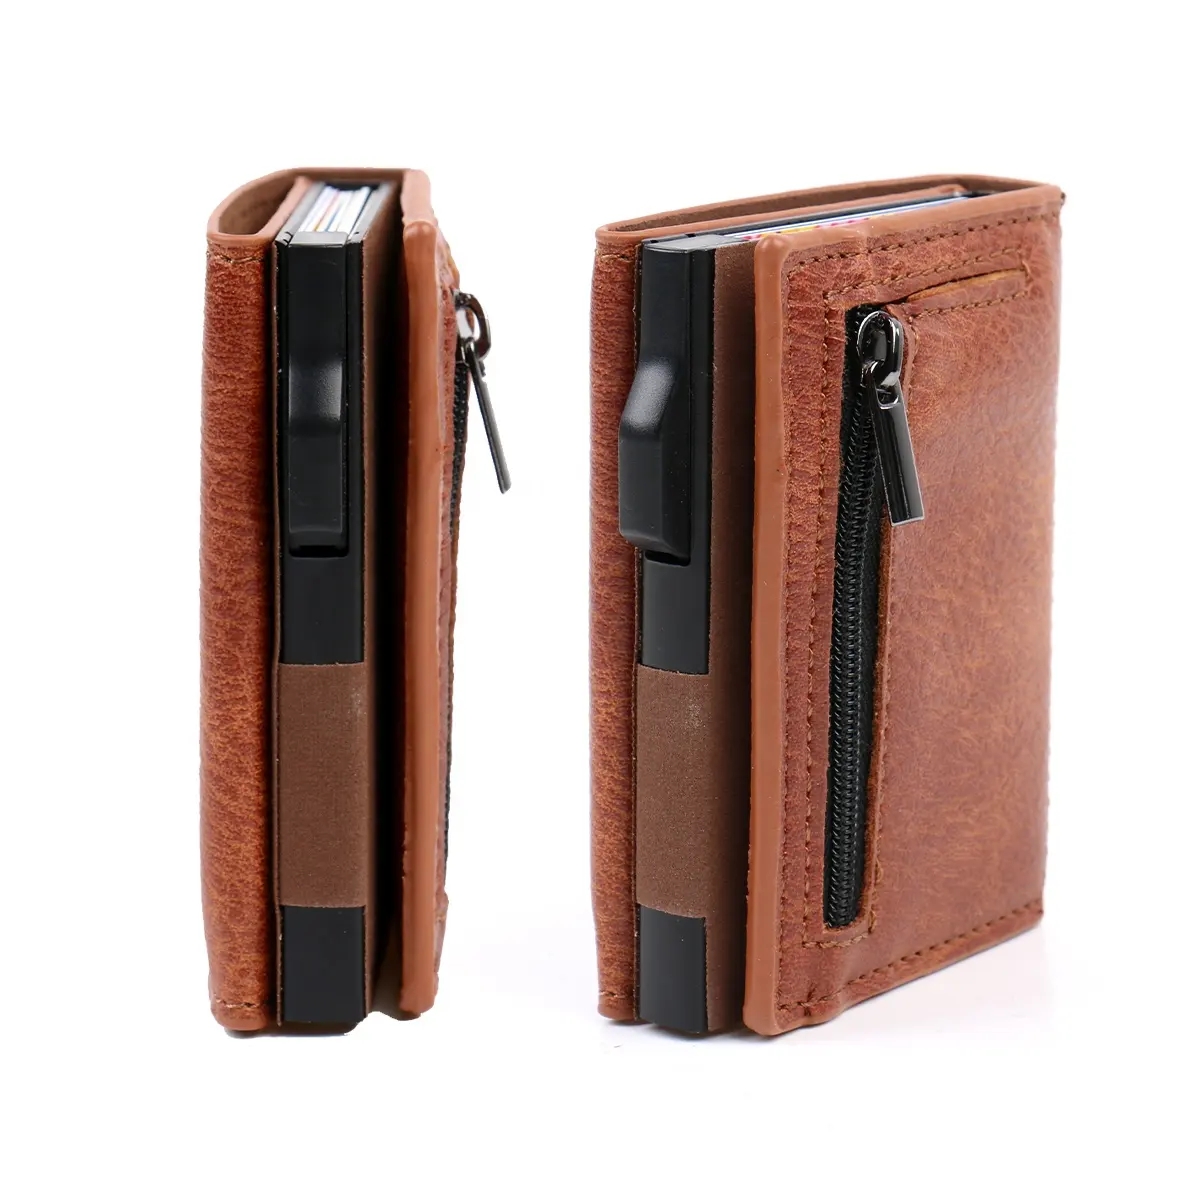 Custom LOGO press Pop up Aluminium alloy metal high-end wallet PU leather banknote card holder Wallet with zipper pocket